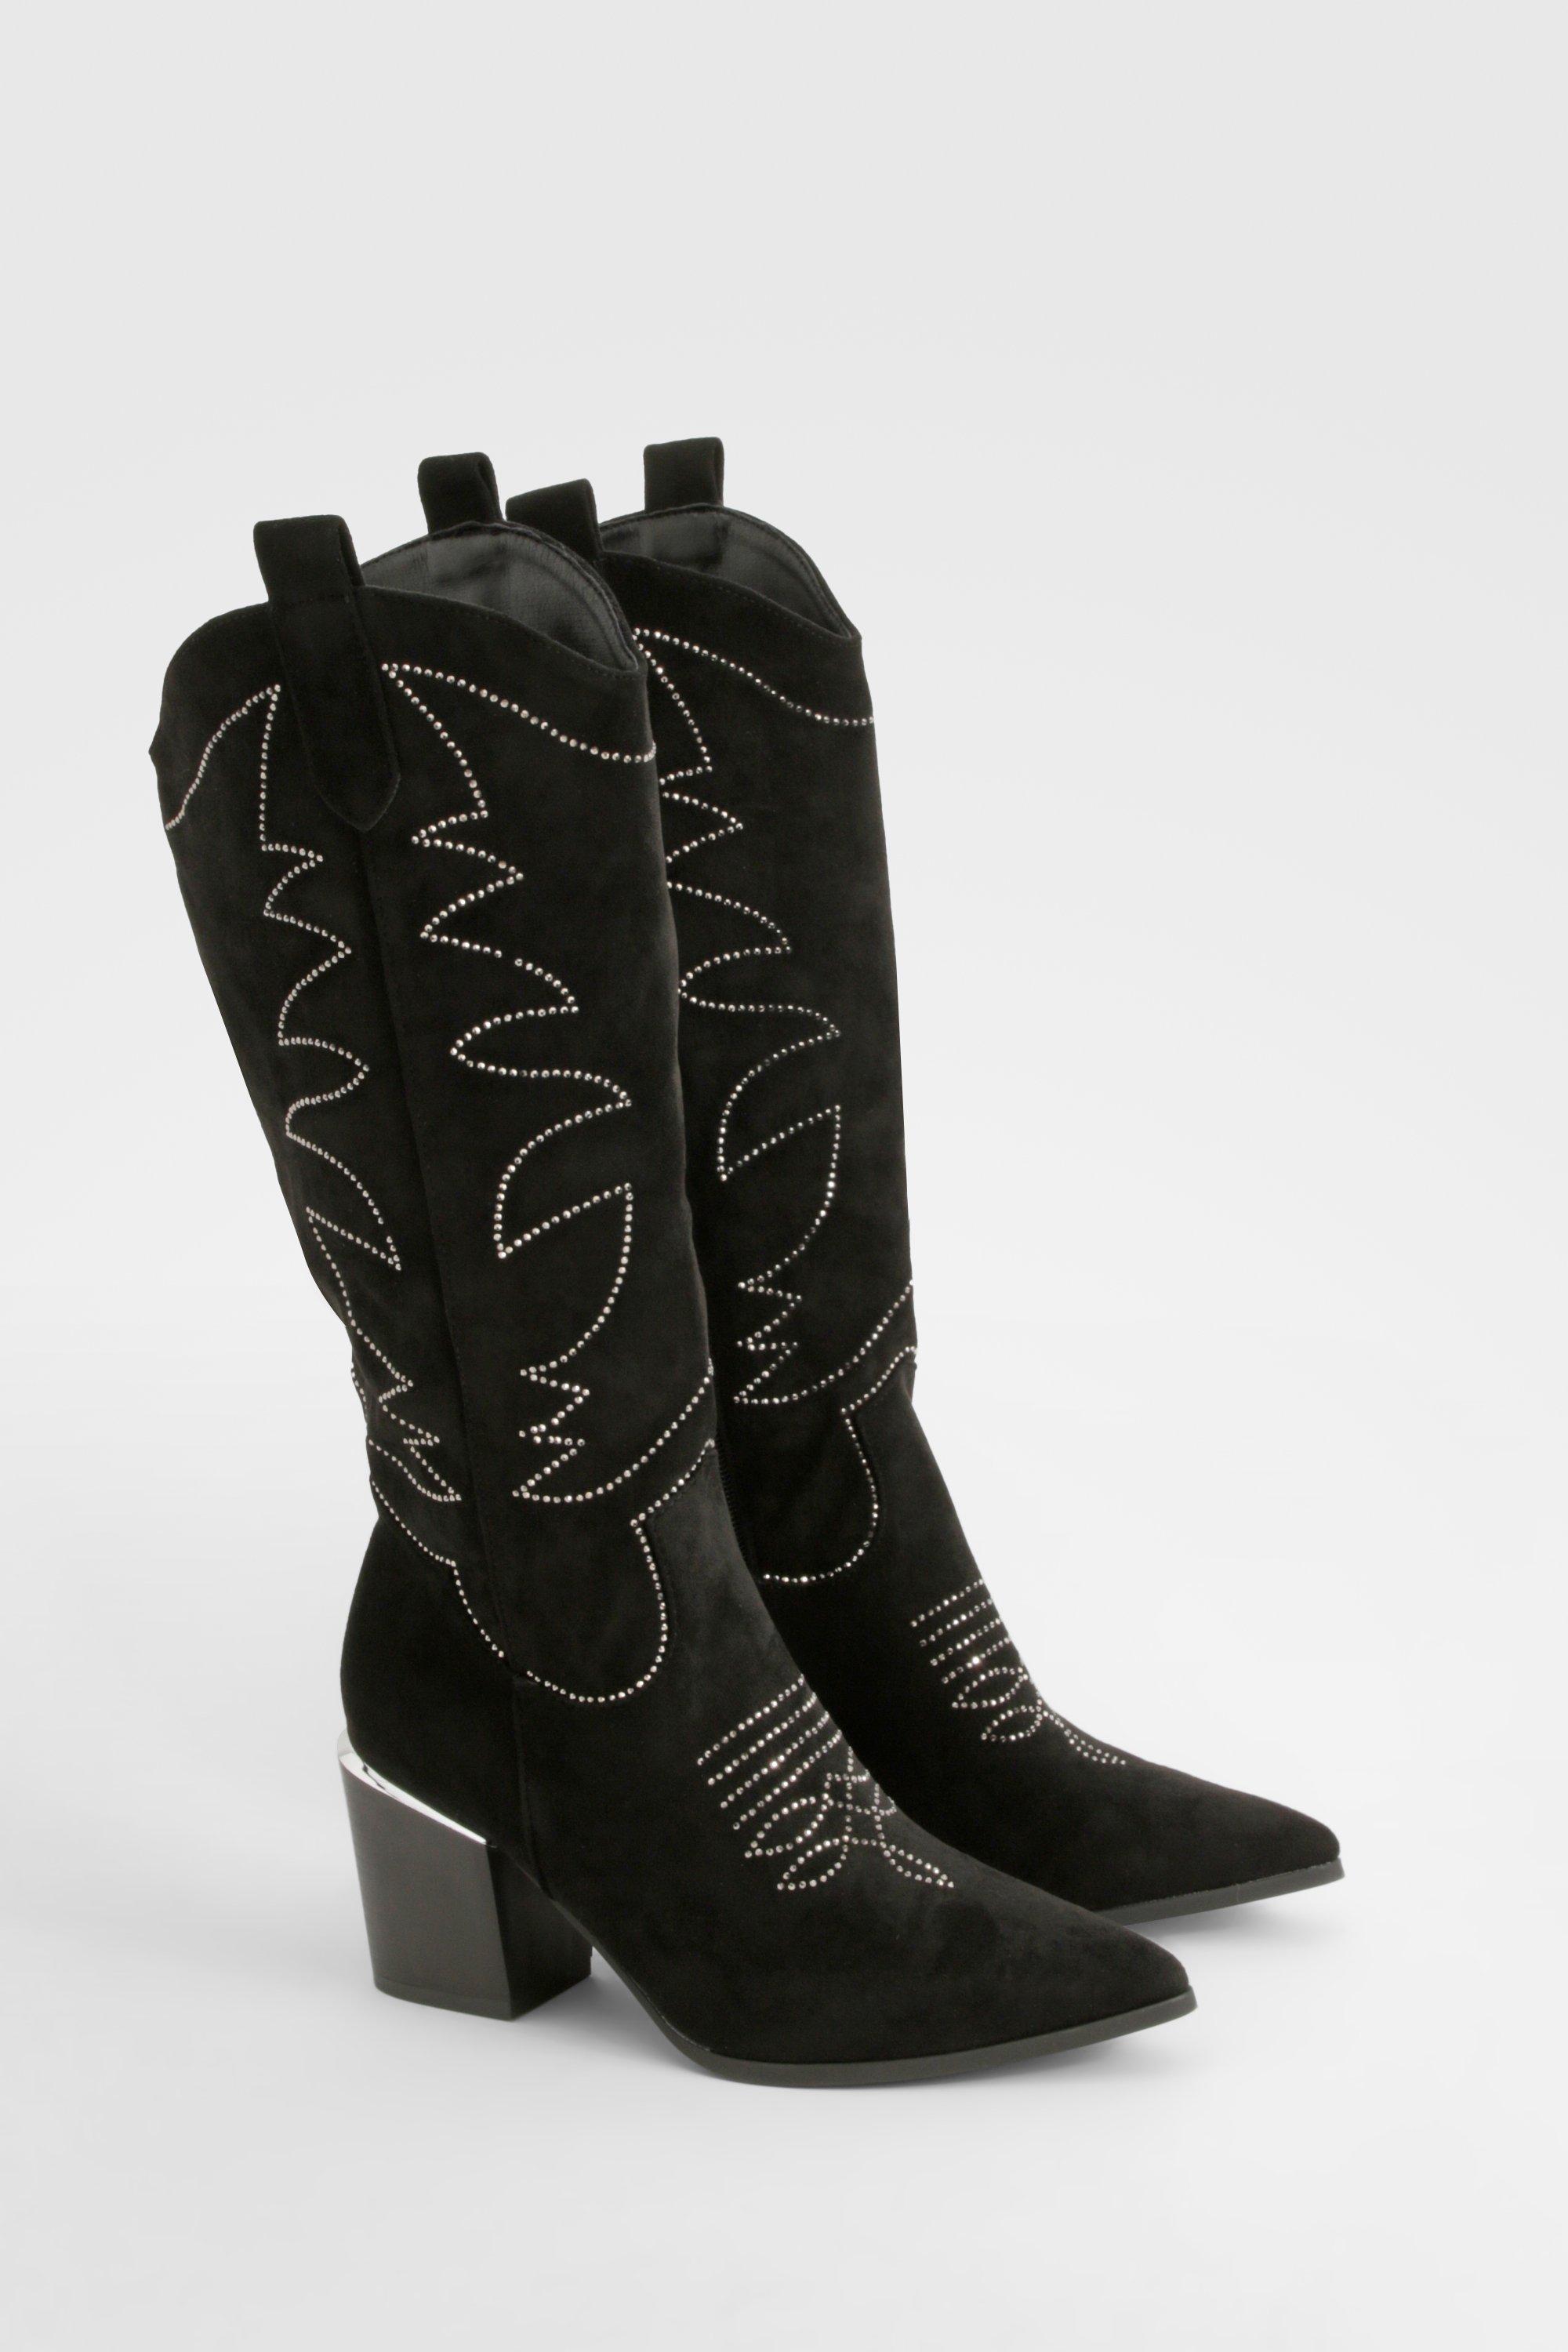 Boohoo Embellished Knee High Western Boots, Black